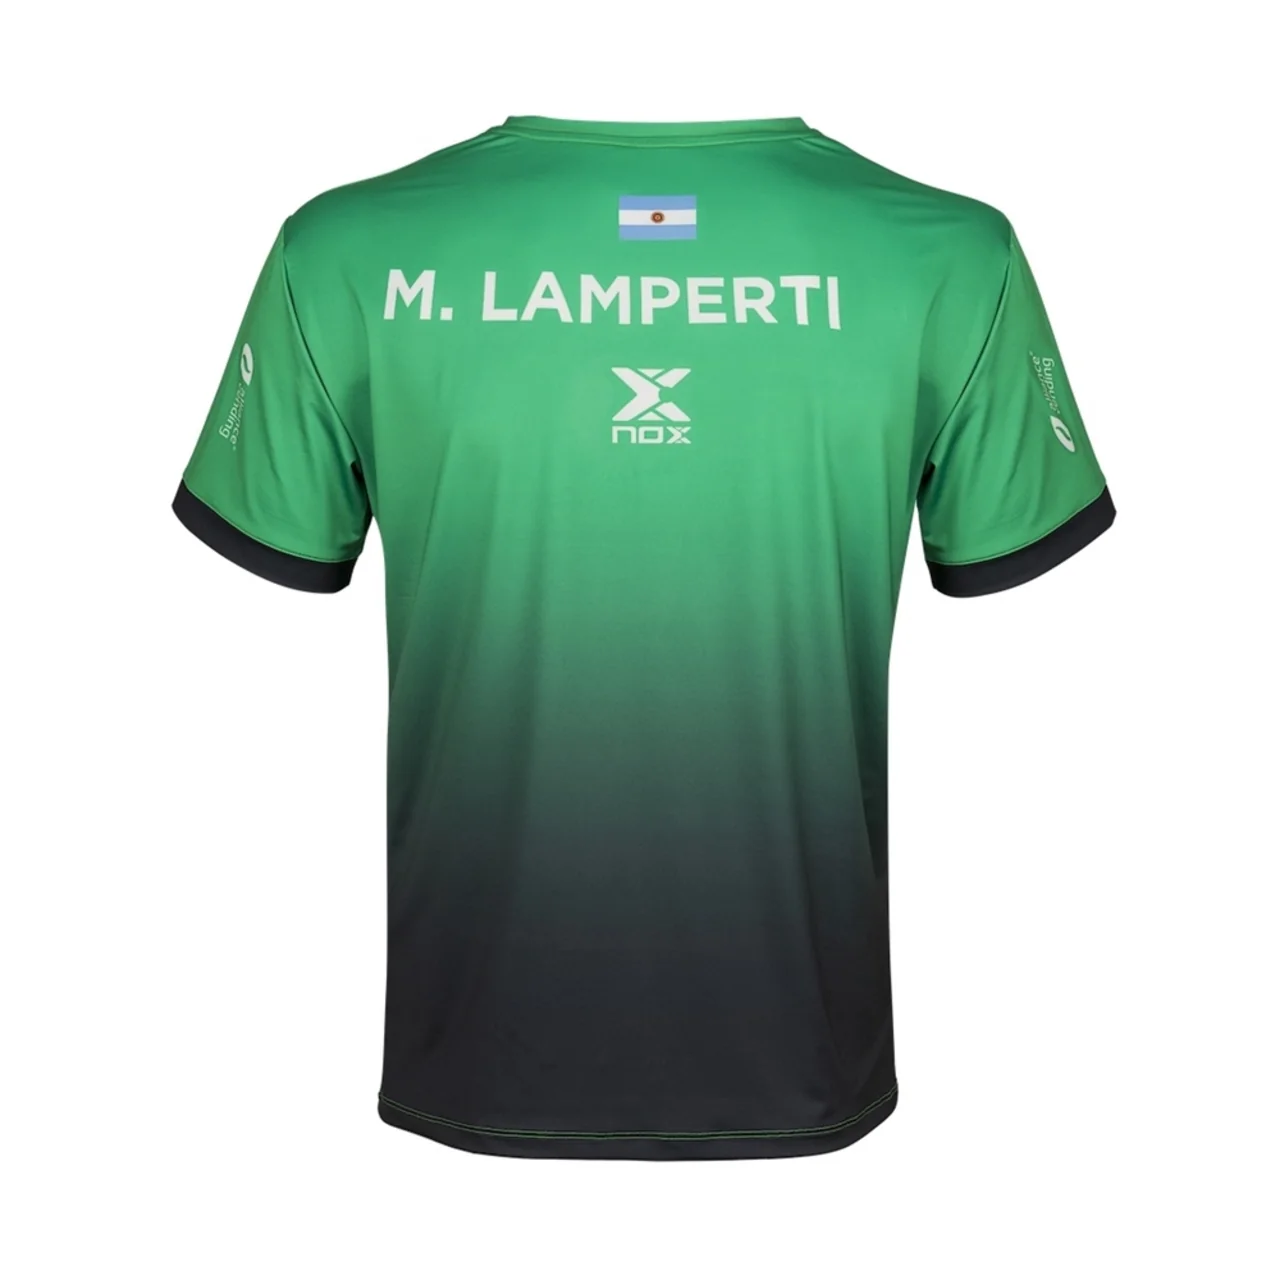 Nox Miguel Lamperti Official Tee Green